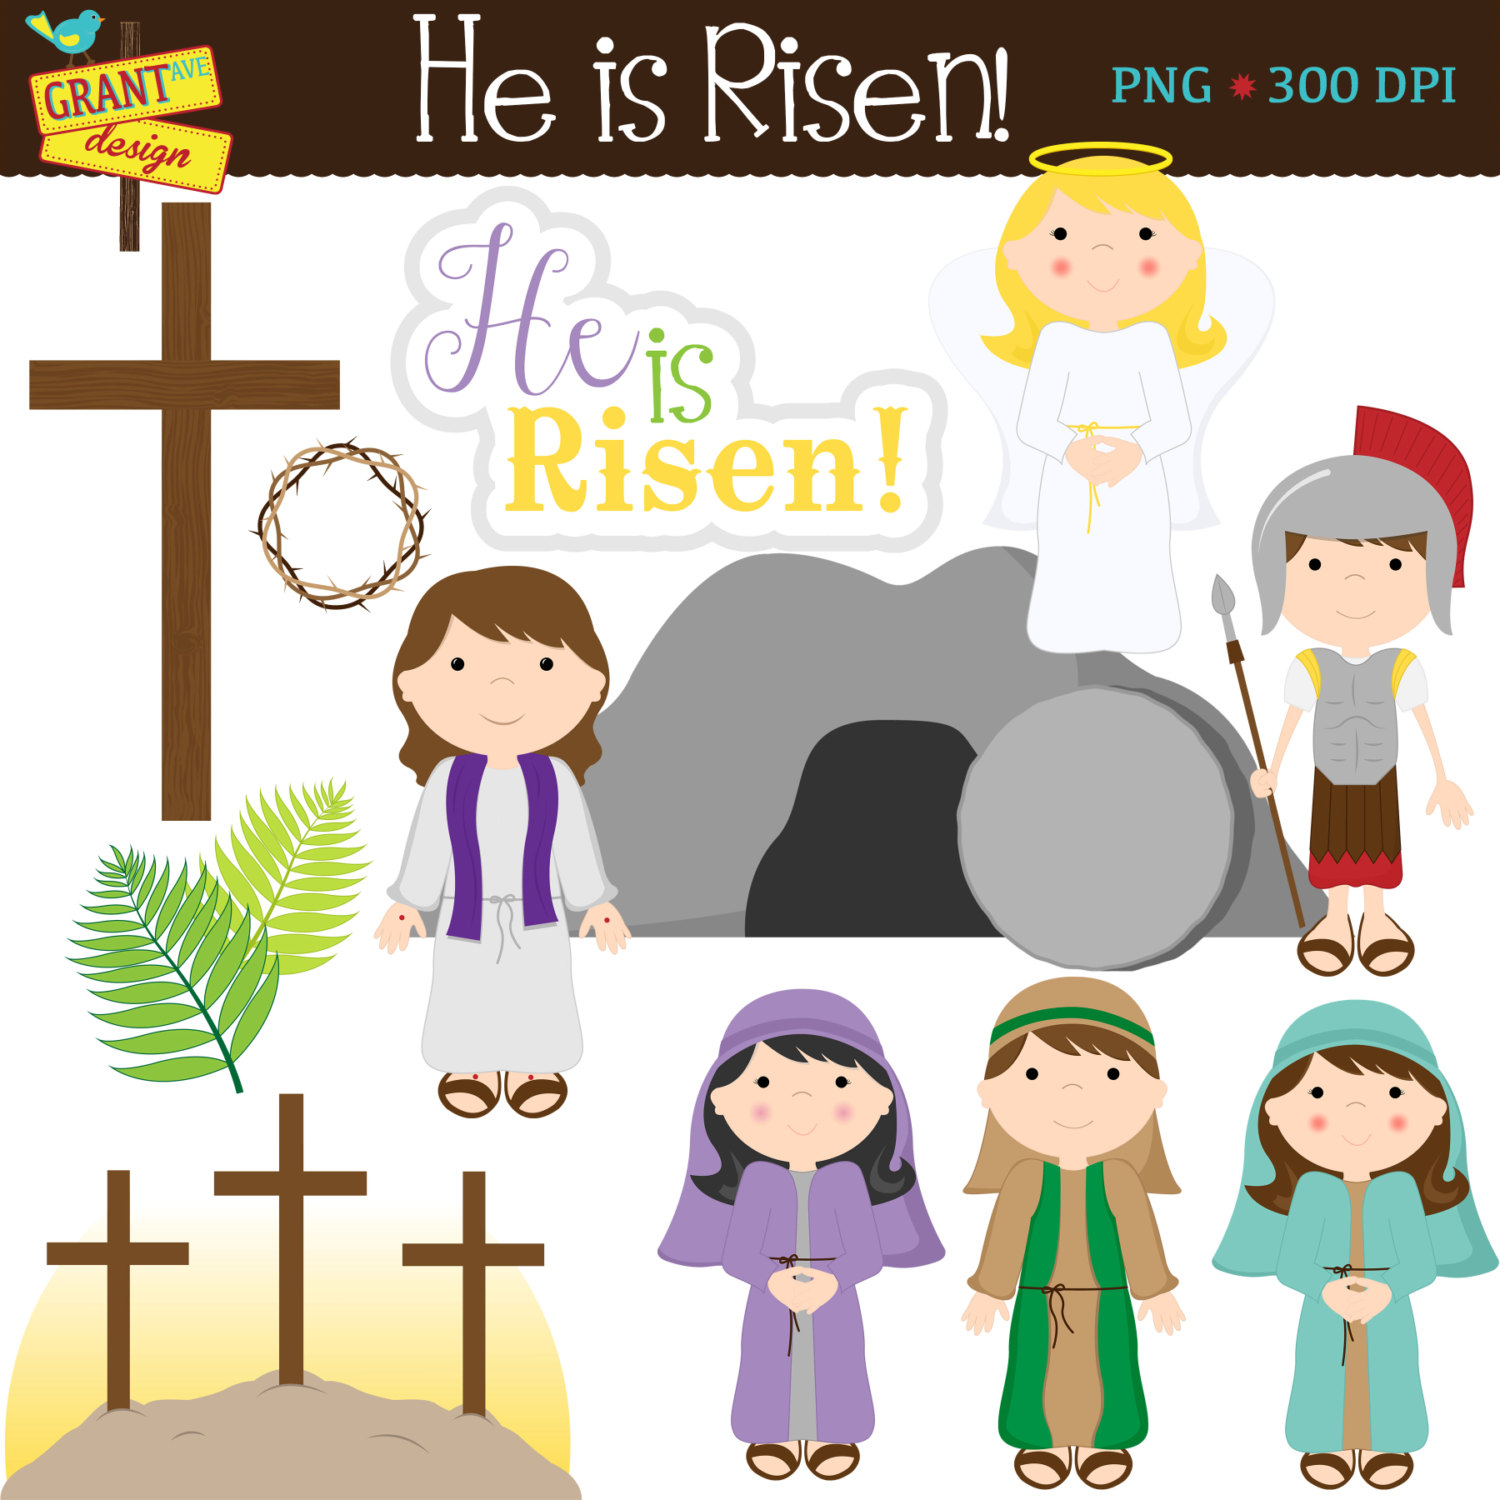 Easter clipart of jesus resurrection 